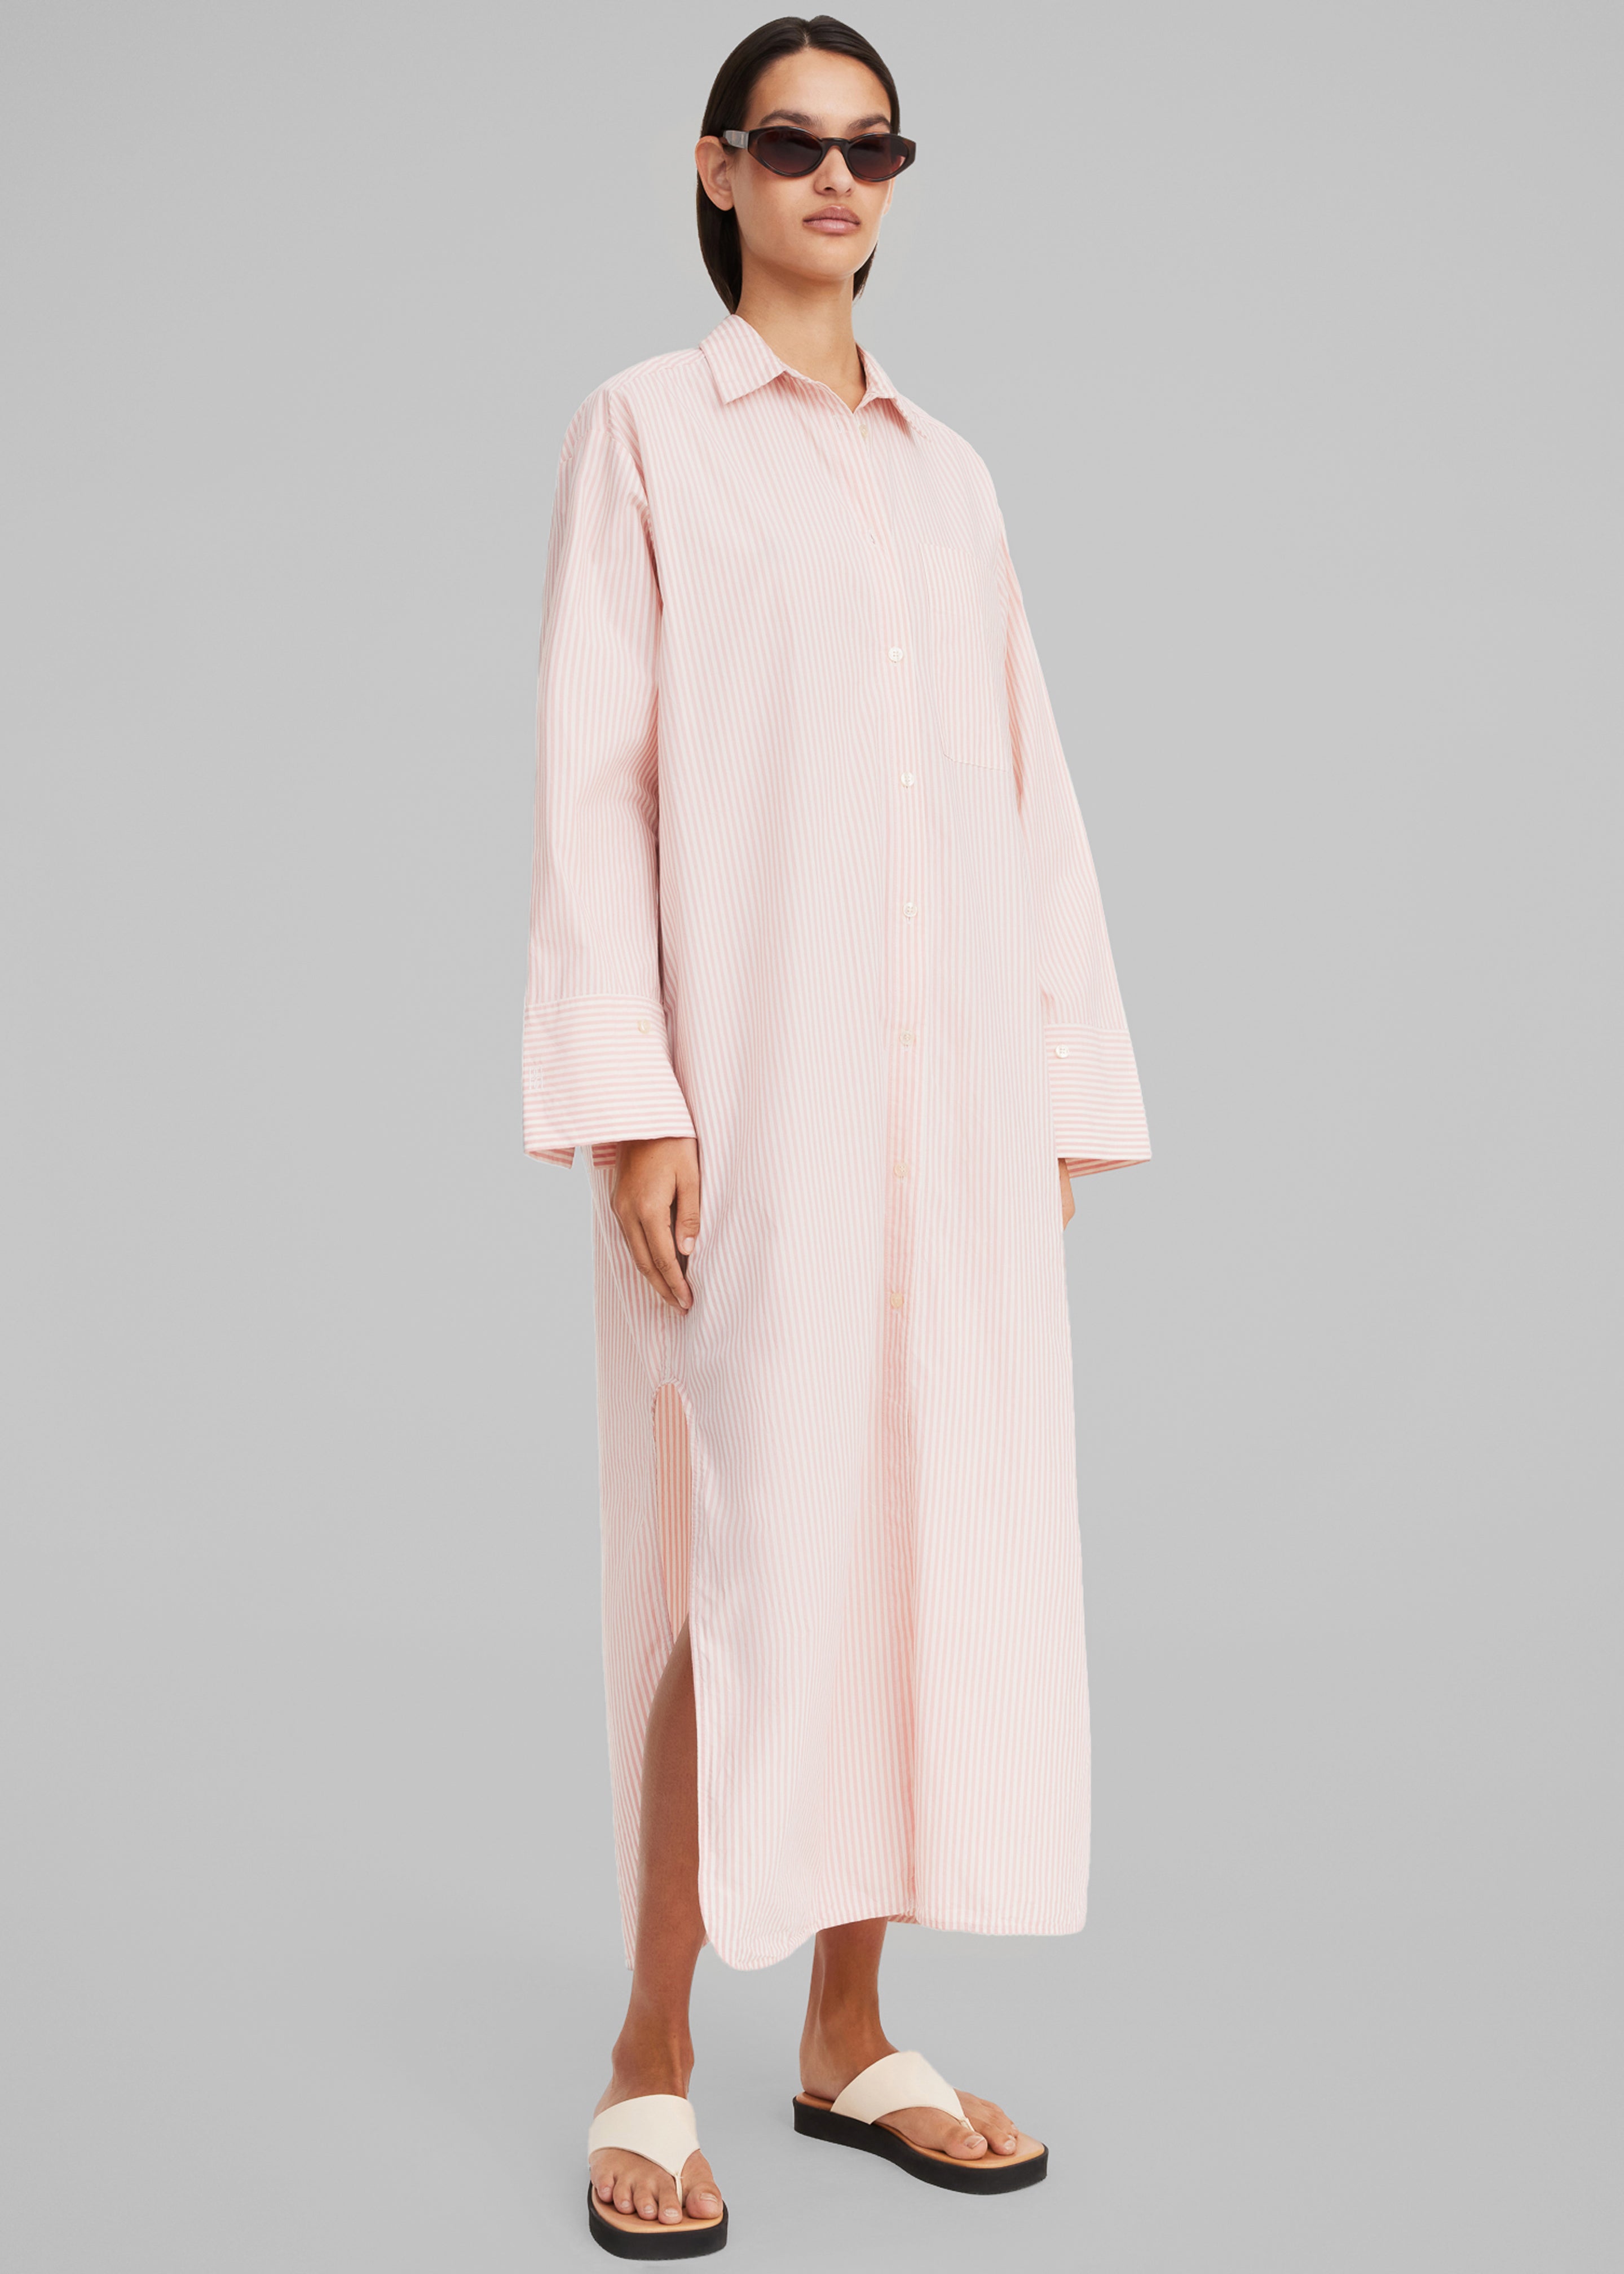 By Malene Birger Perros Dress - Pink Stripe - 1